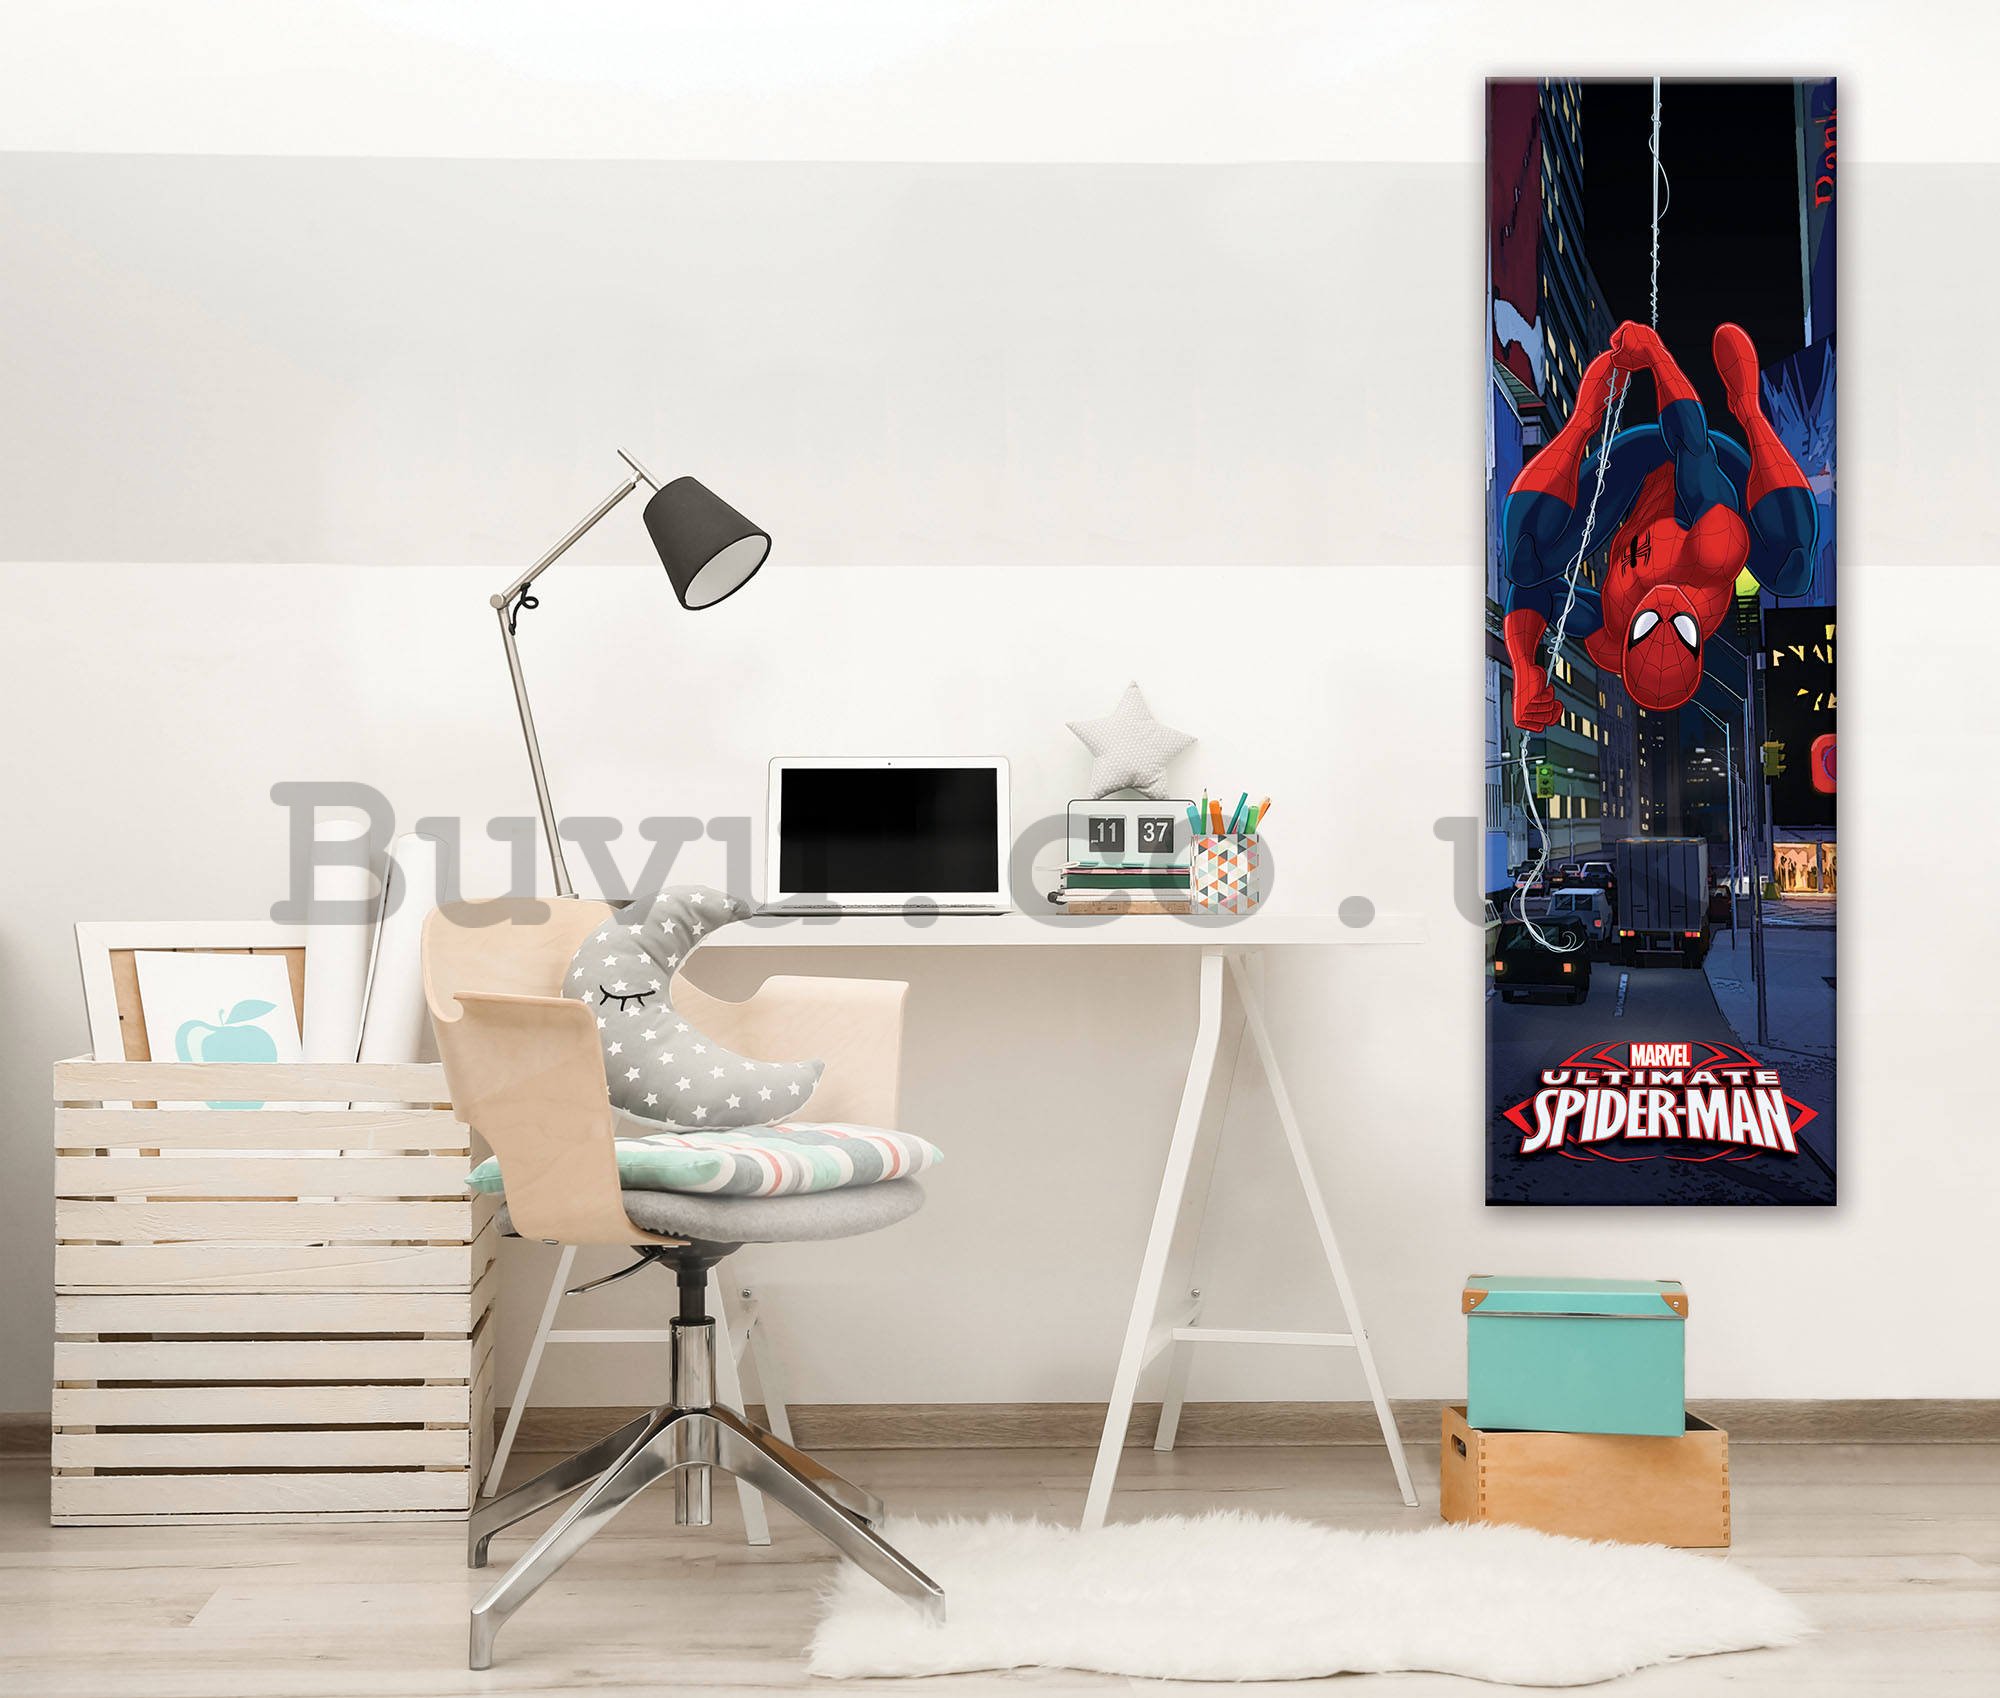 Painting on canvas: Marvel Ultimate Spiderman - 45x145 cm